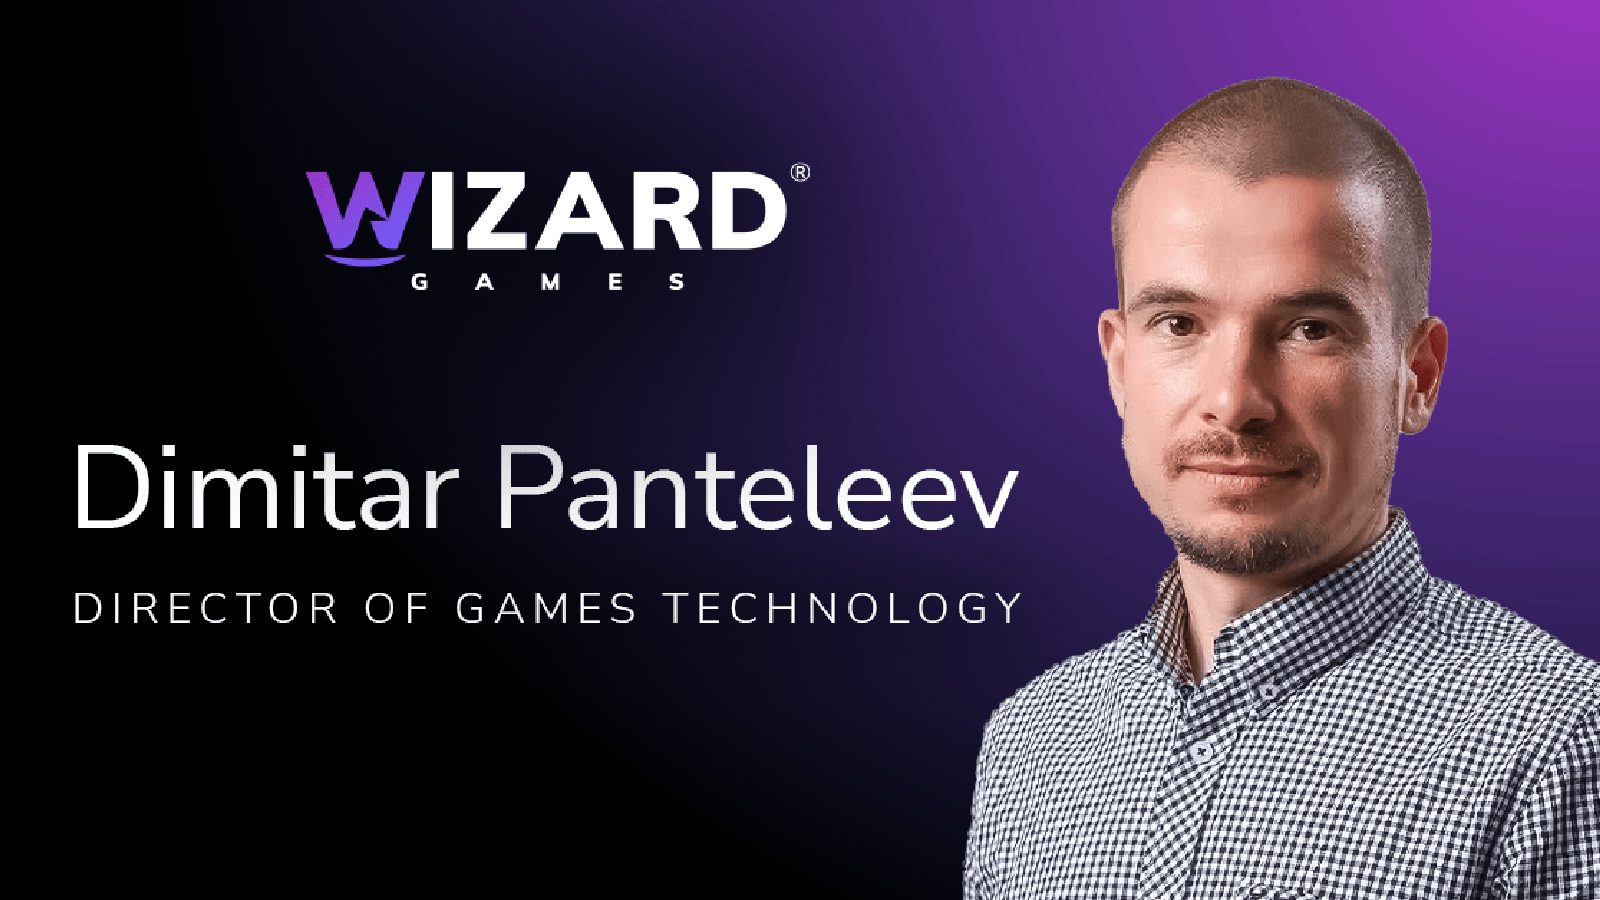 Dimitar Panteleev Appointed at Wizard Games